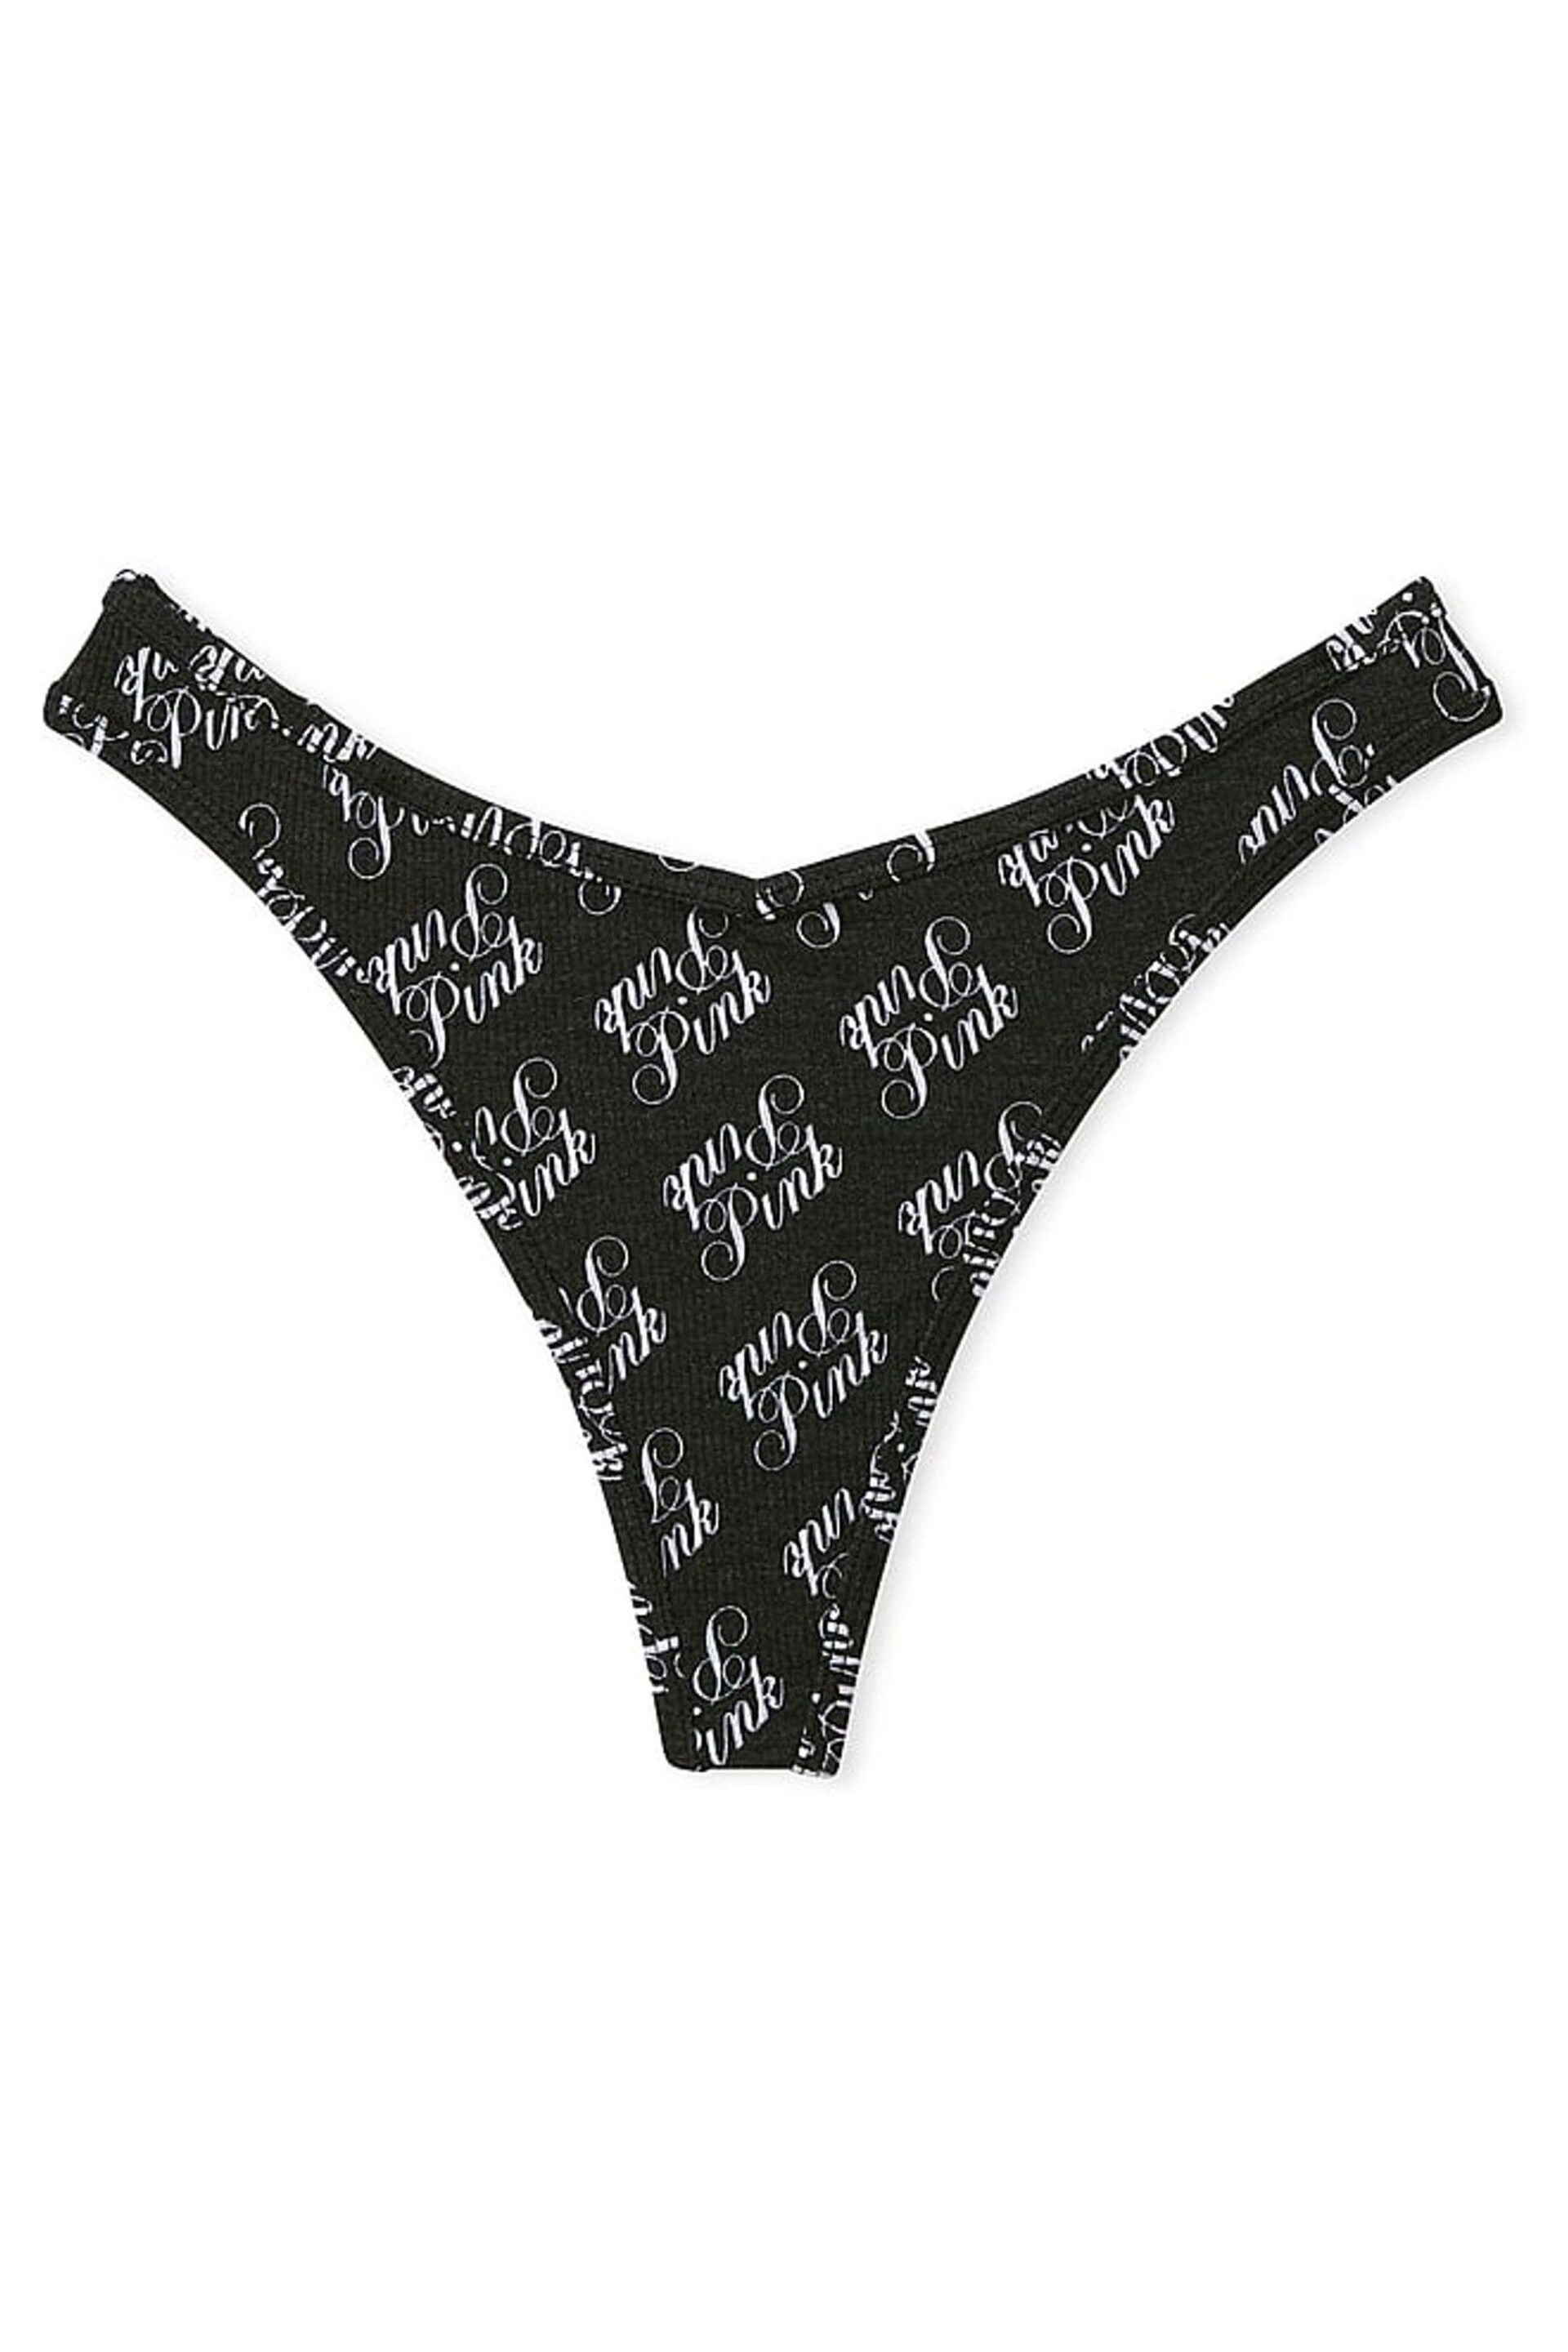 Victoria's Secret PINK Pure Black Script Print Rib Cotton Thong Knickers - Image 4 of 4